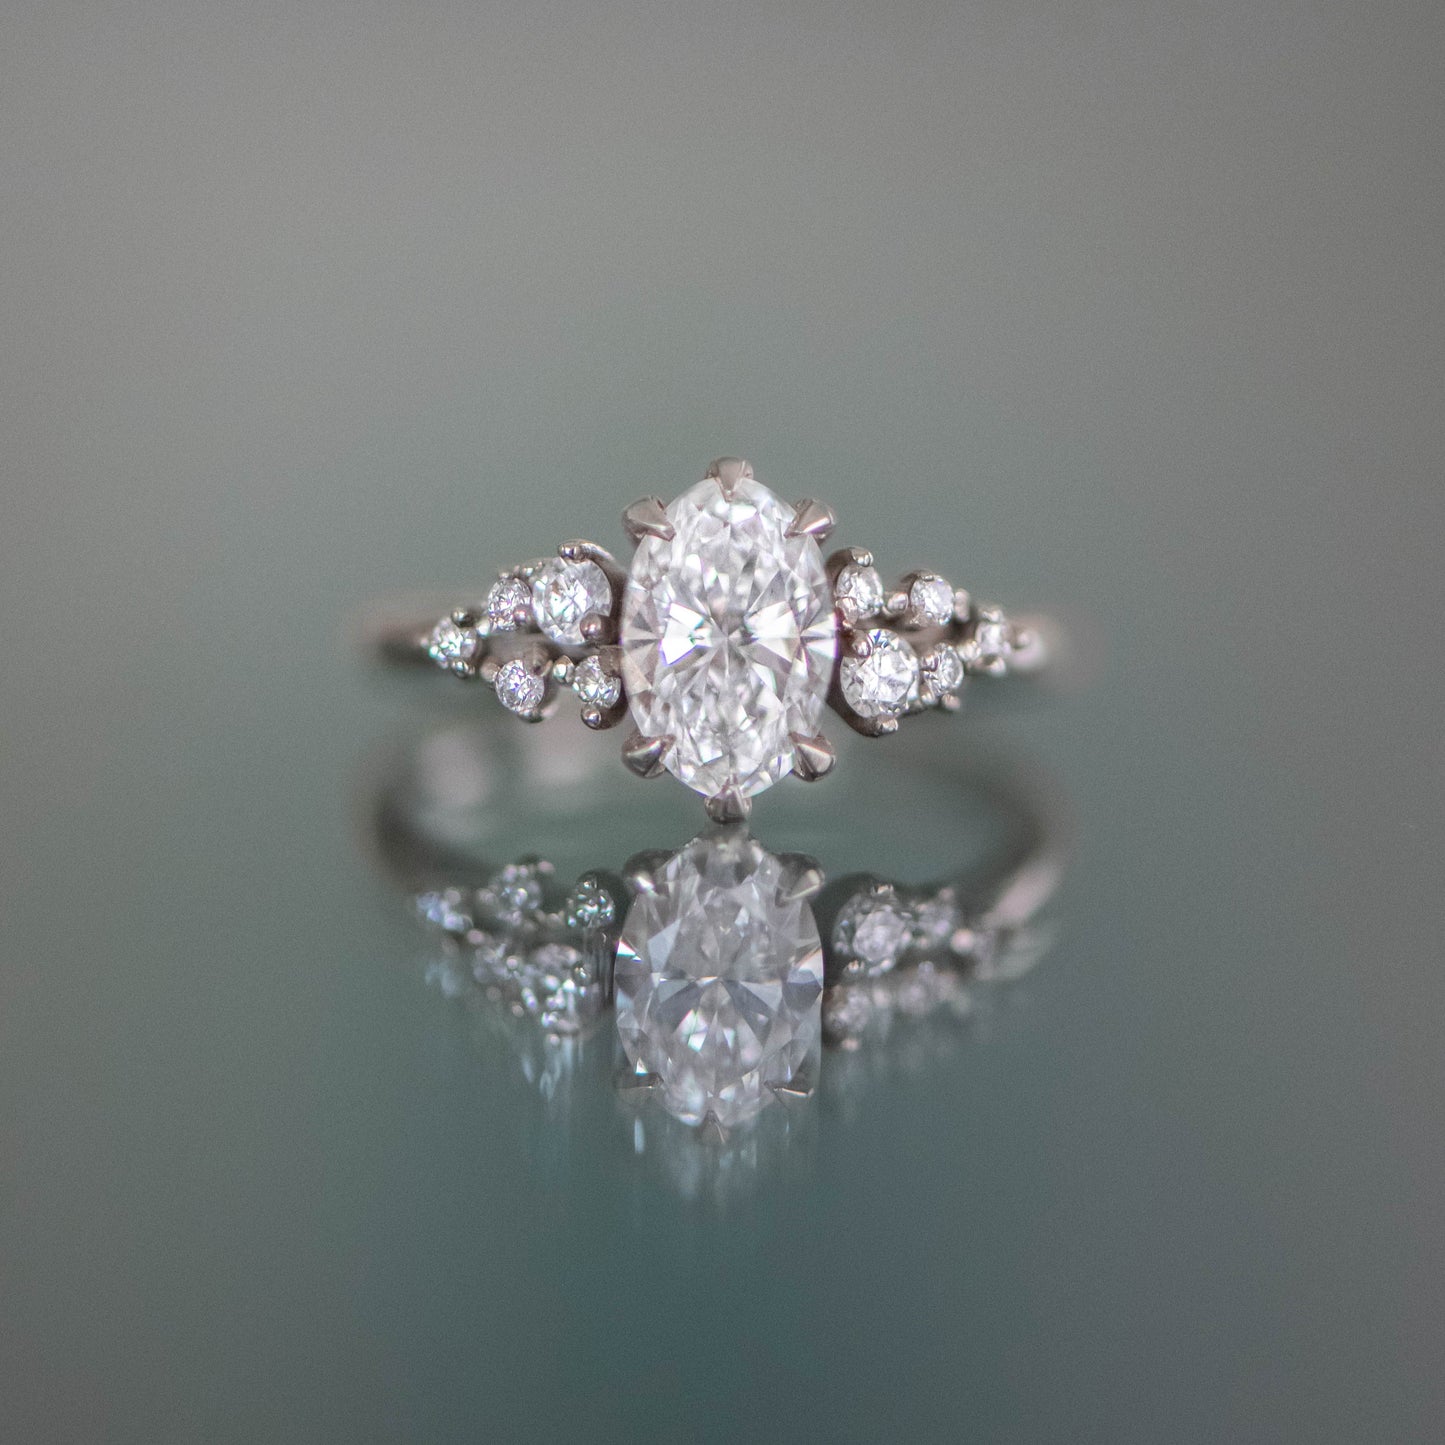 Effervescent Ring featuring Diamonds